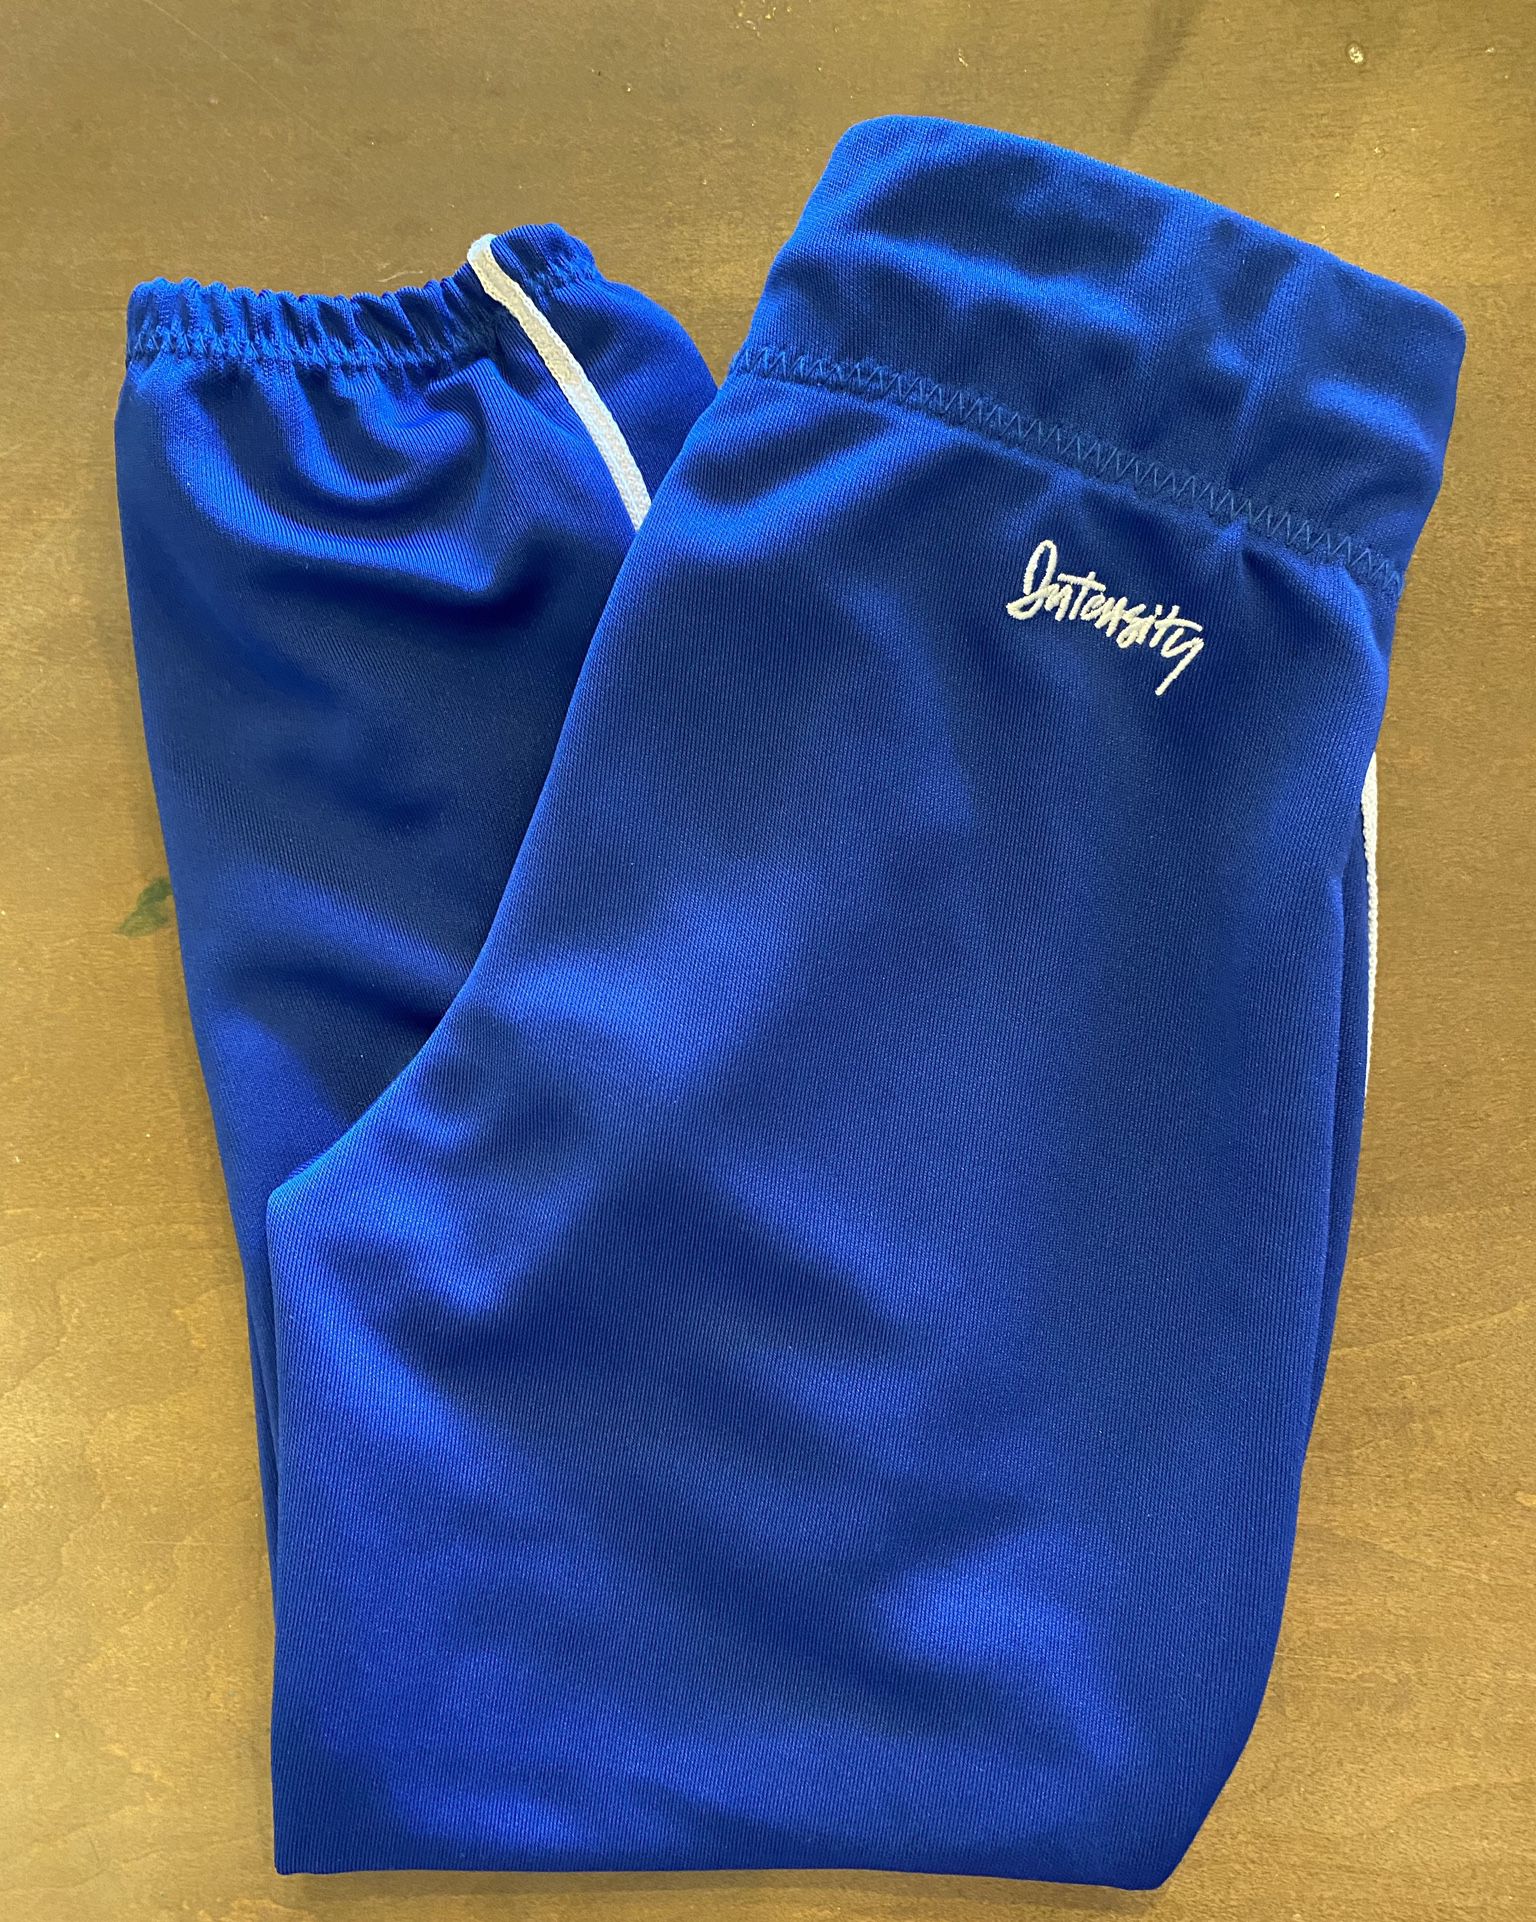 Blue Girls Youth Softball Pants With White Piping/braiding. Medium Brand: Intensity 